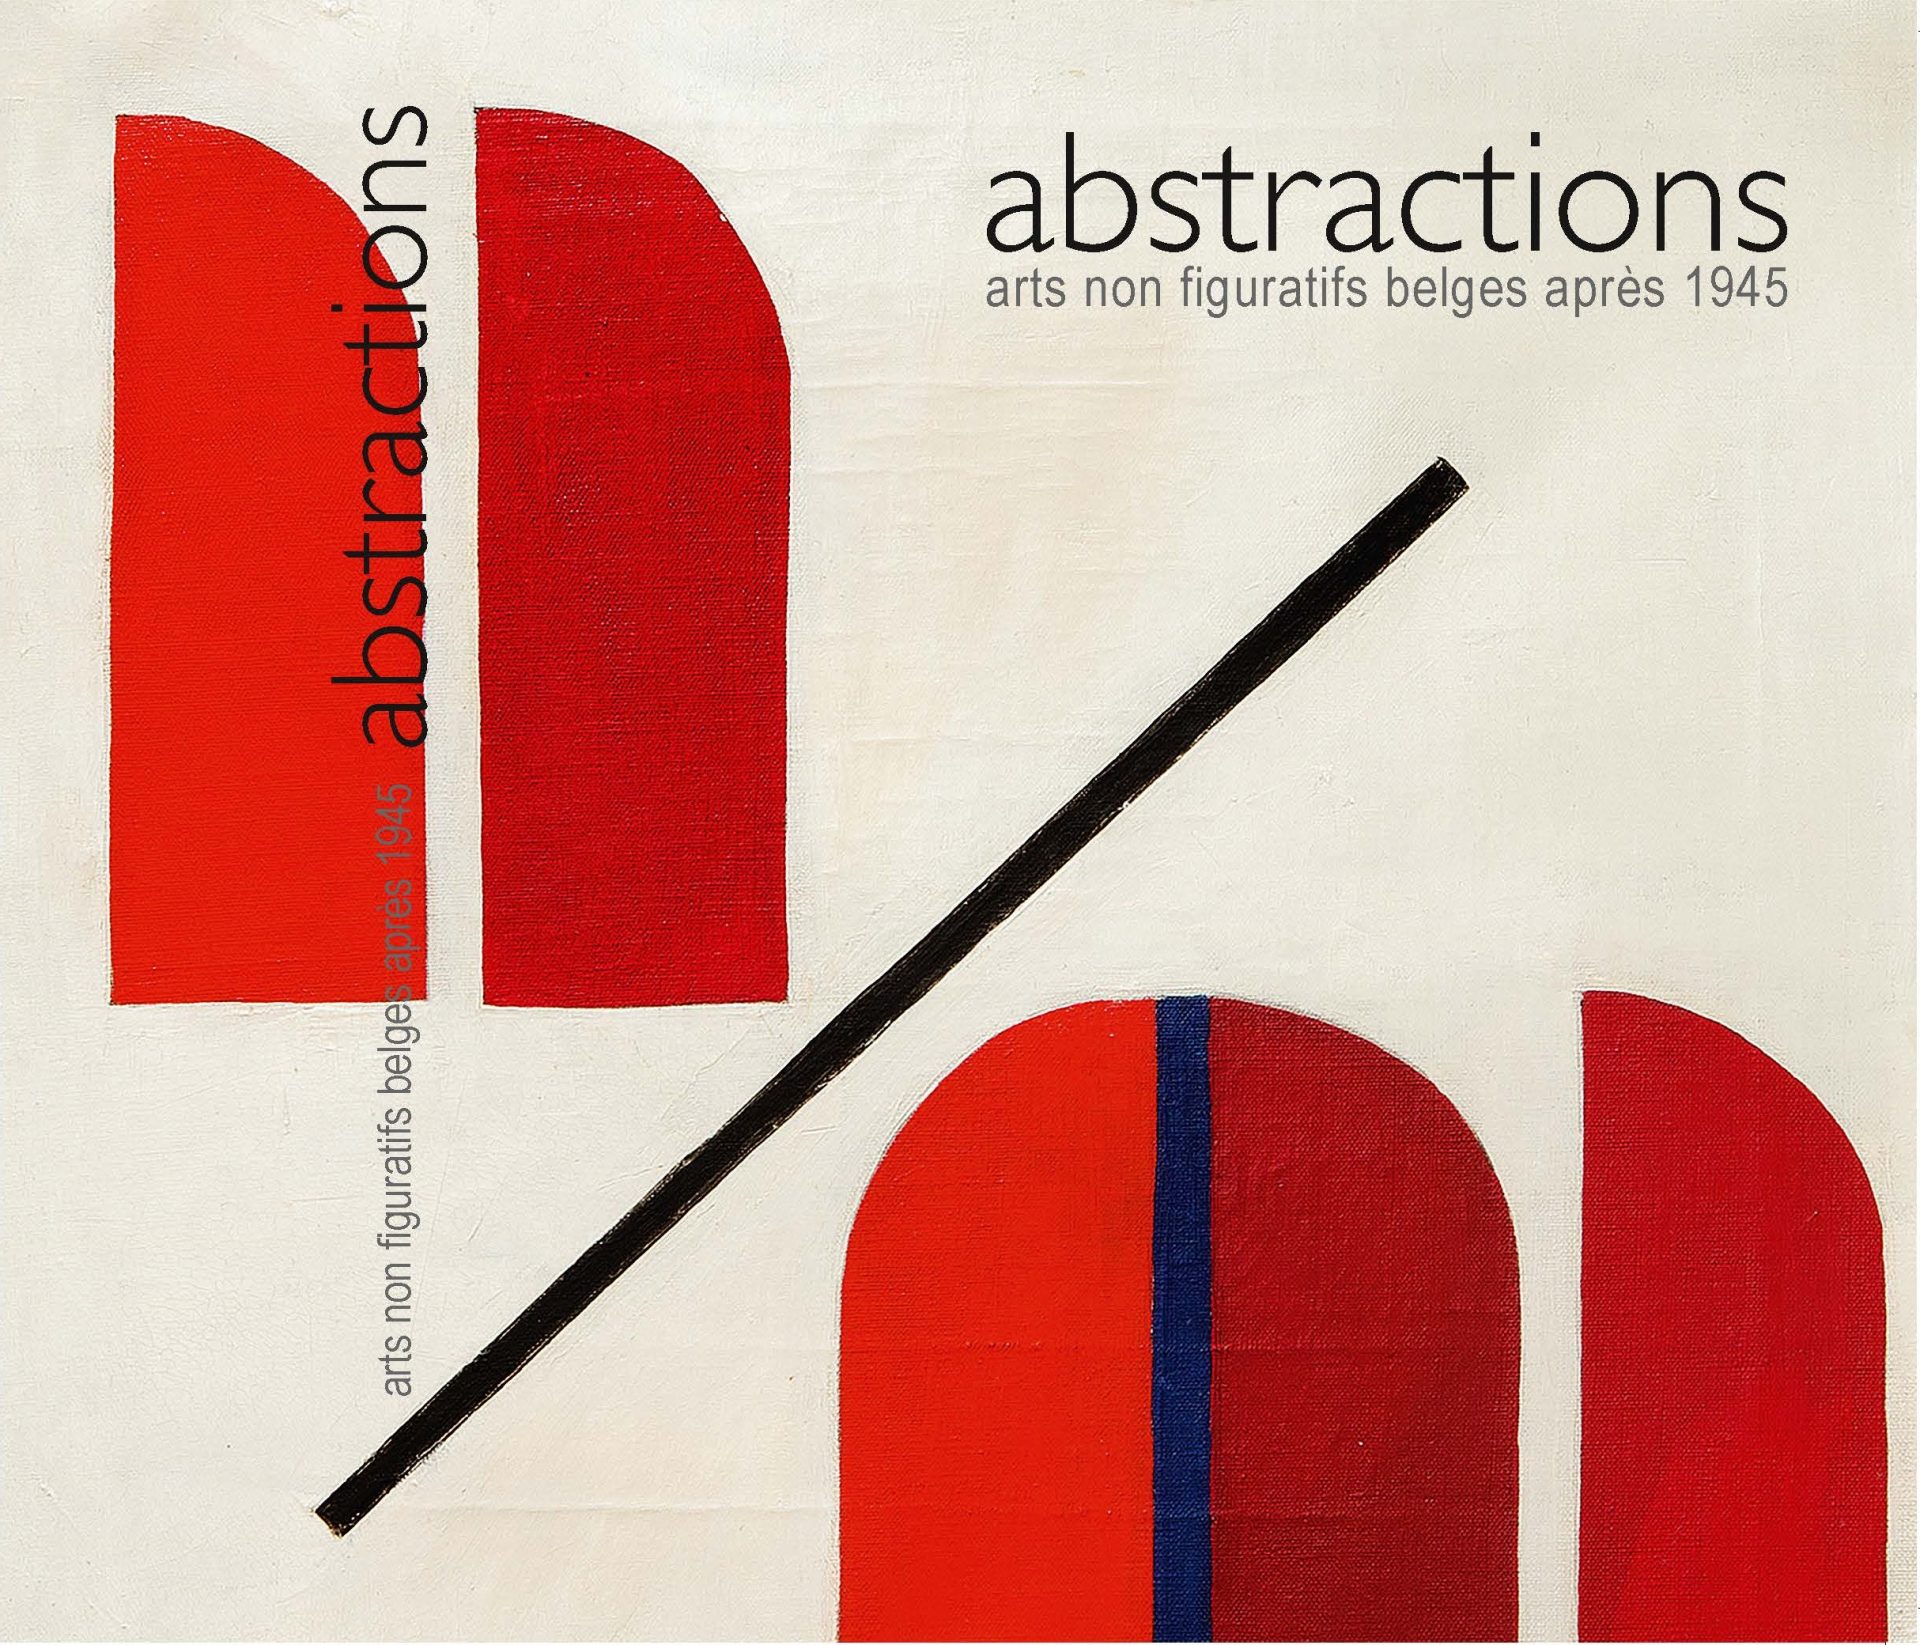 Abstractions, arts non figuratifs belges après 1945